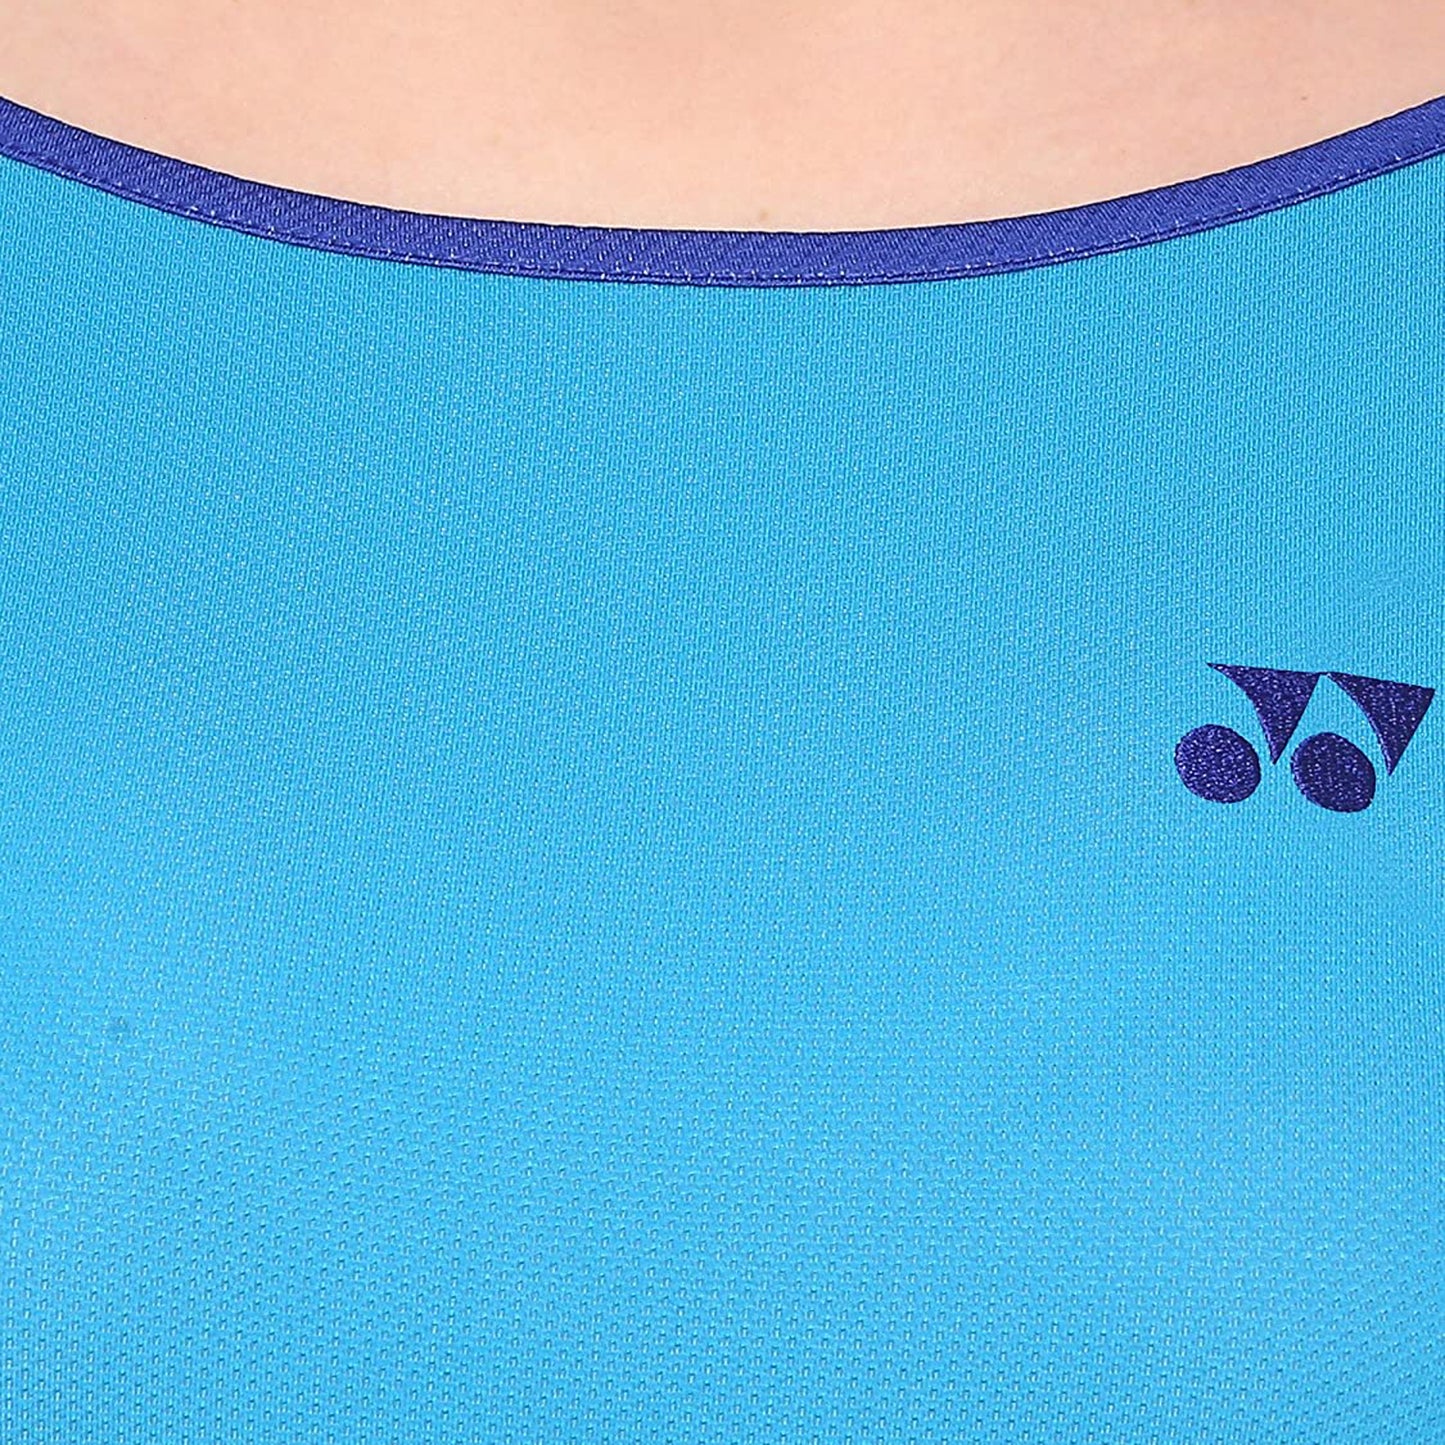 Yonex 20282 Round Neck T Shirt for Women, Capri Breeze - Best Price online Prokicksports.com